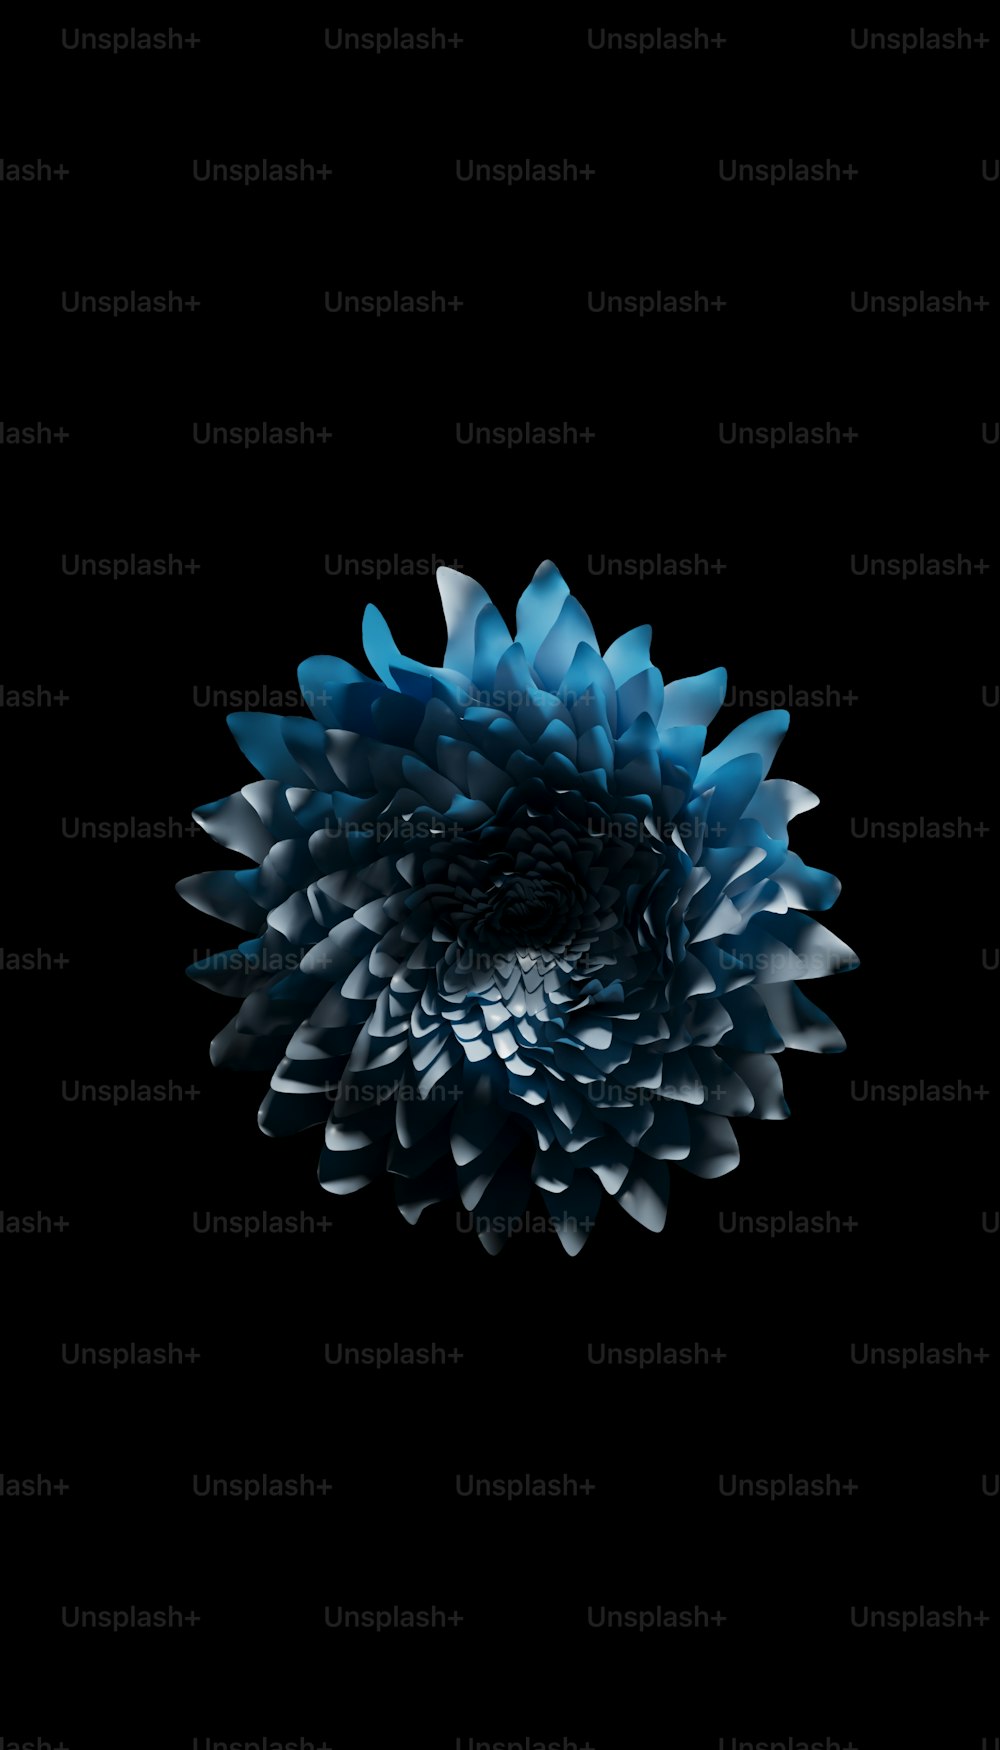 a large blue flower on a black background